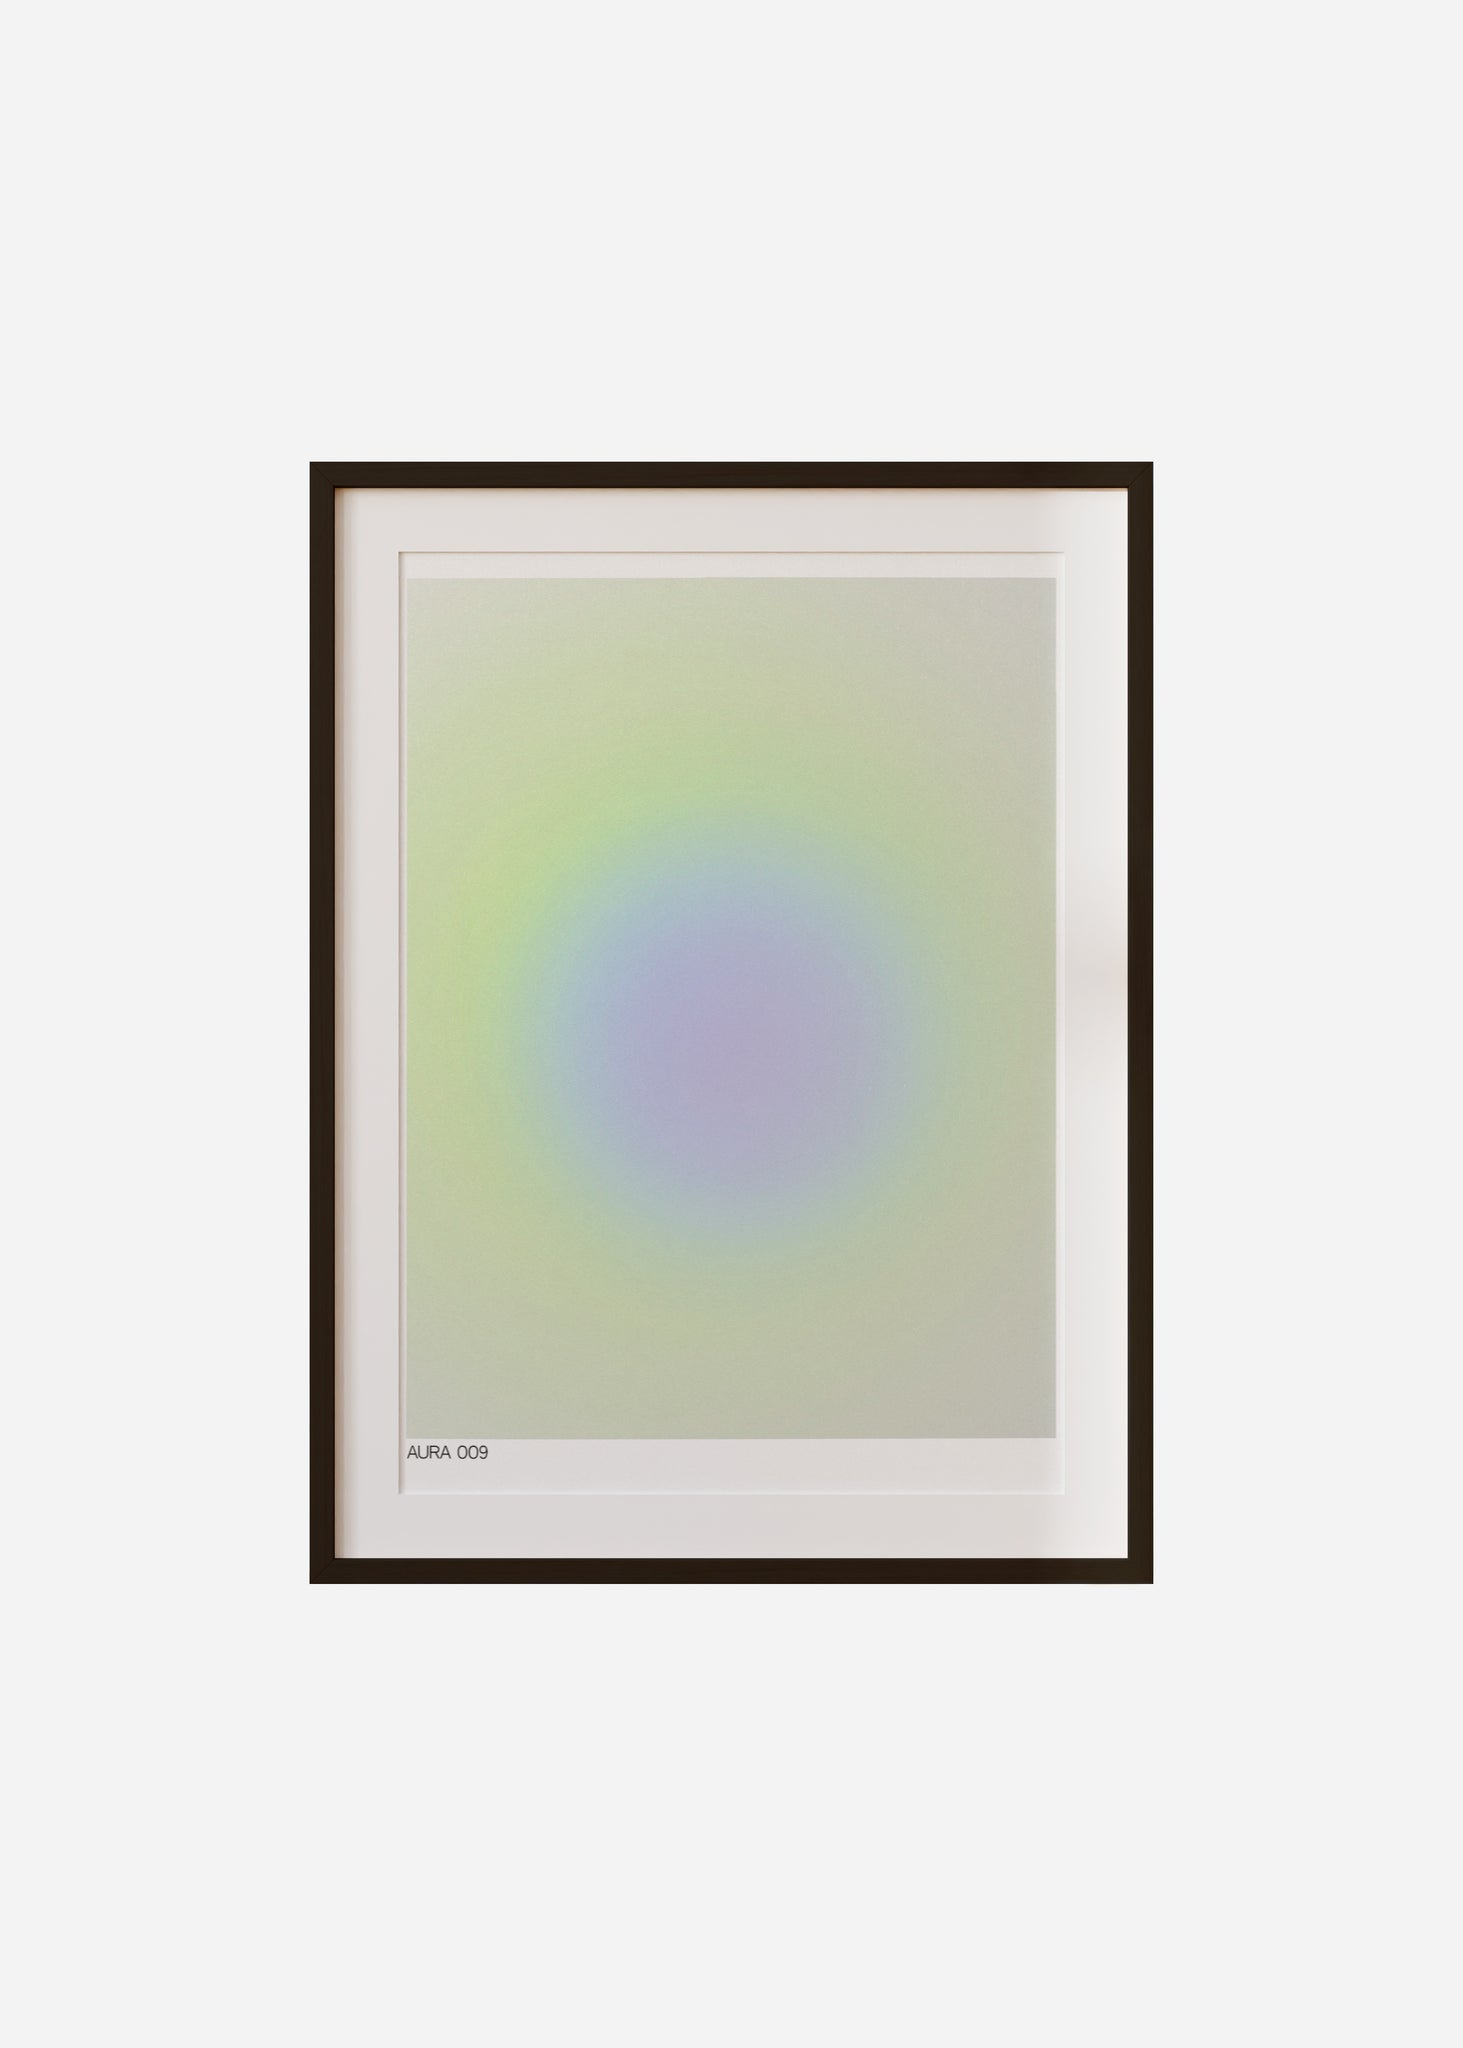 aura 009 Framed & Mounted Print